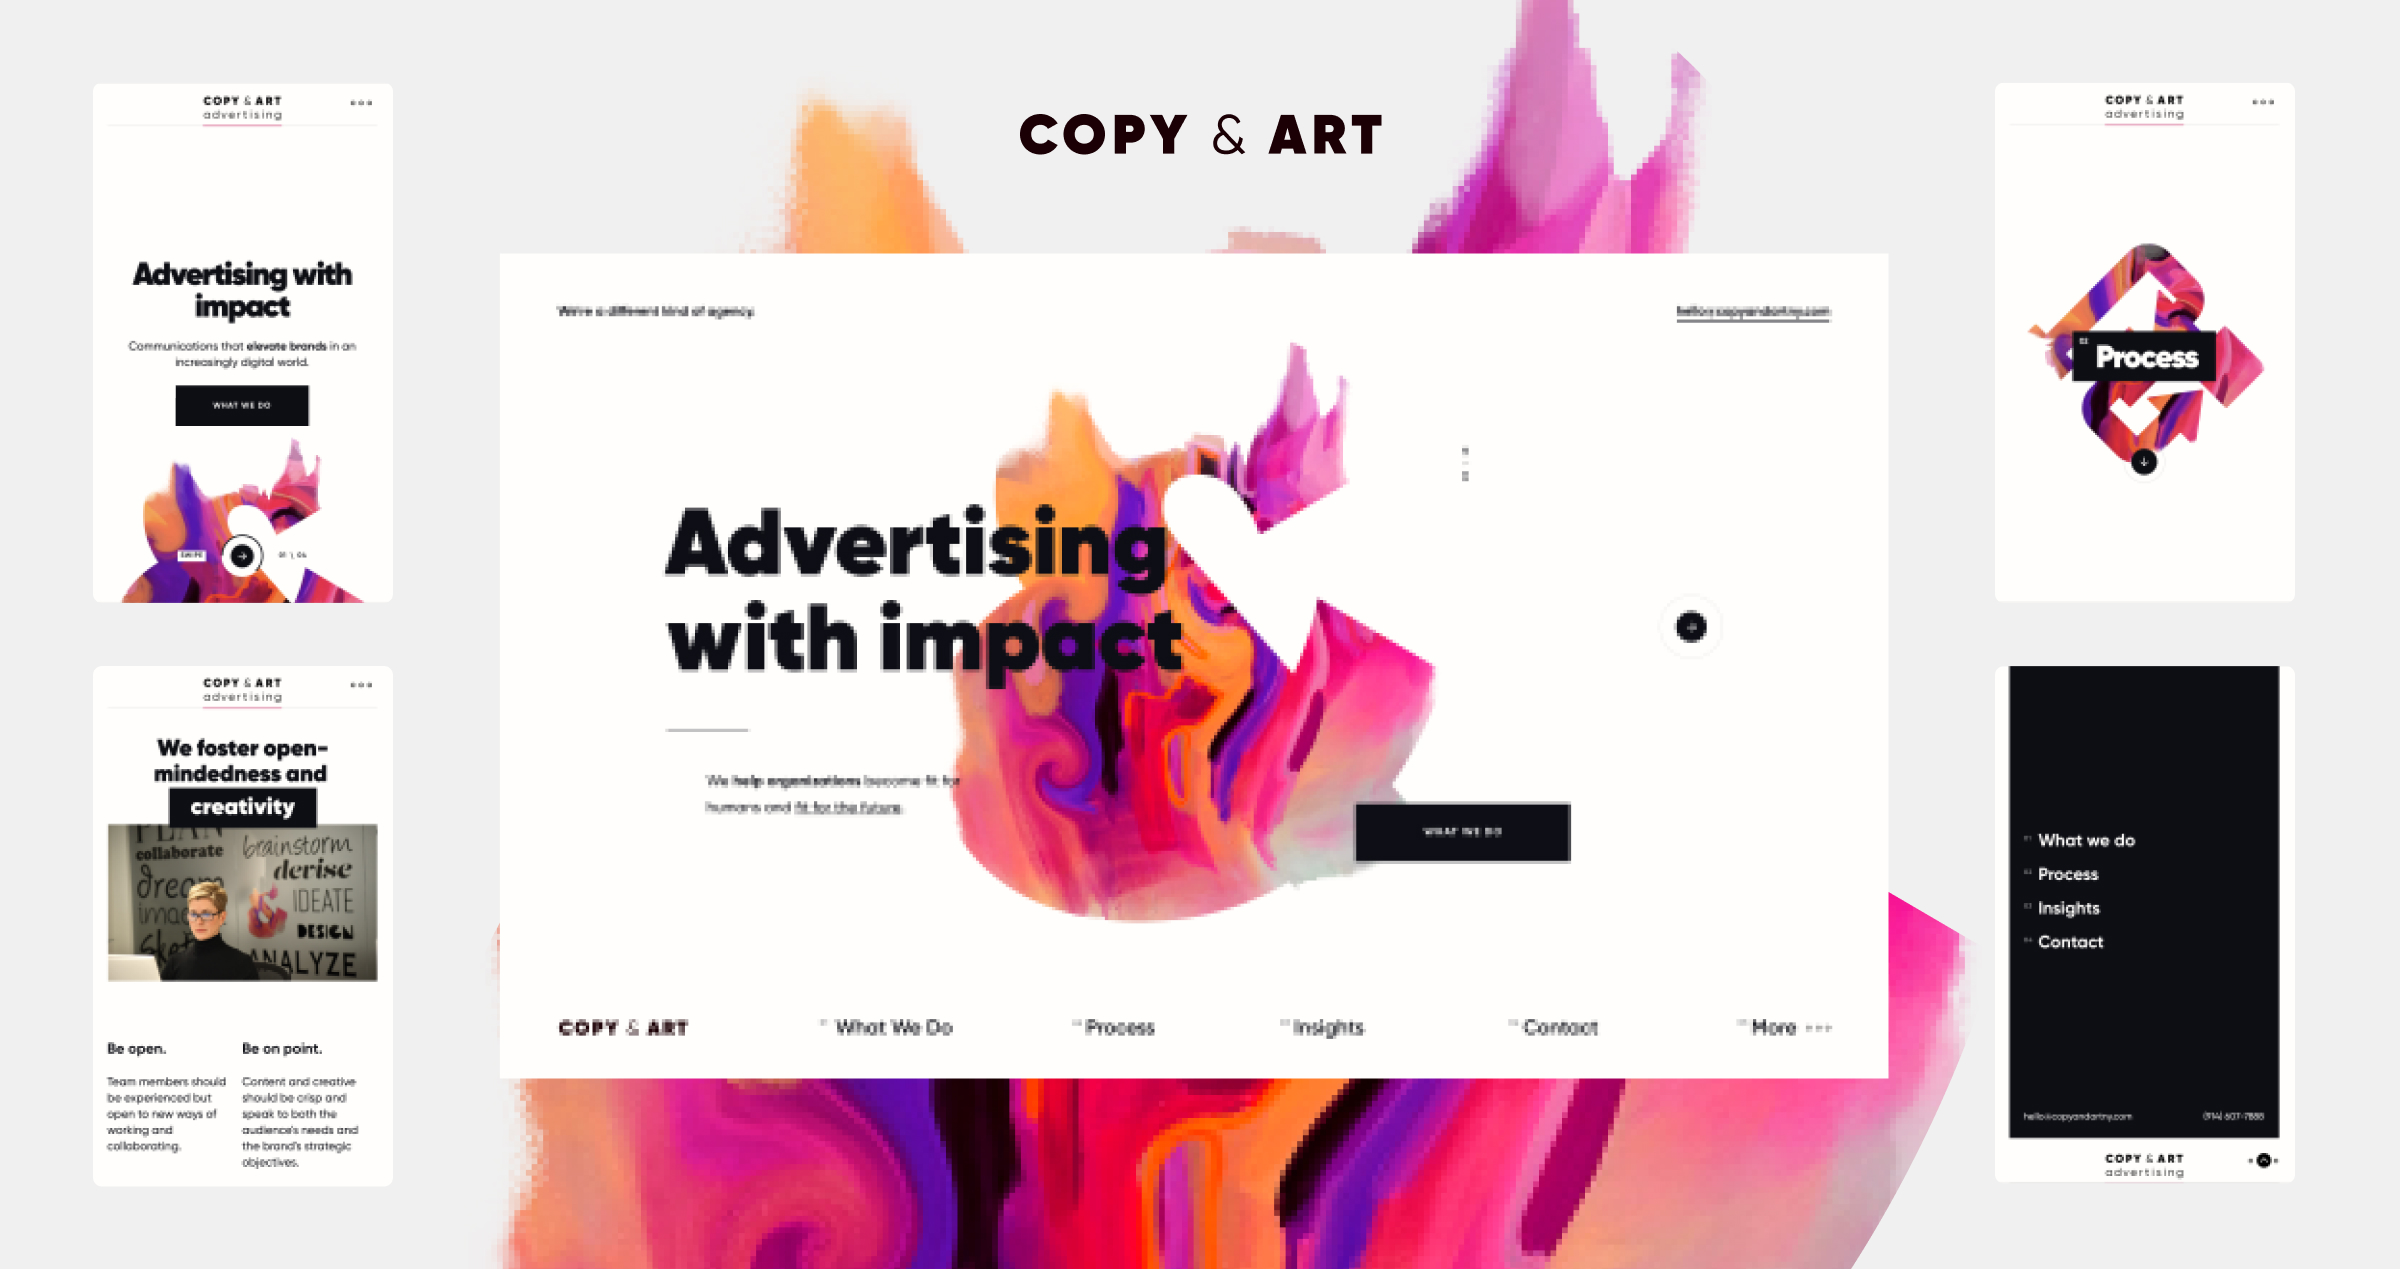 Copy & Art Advertising